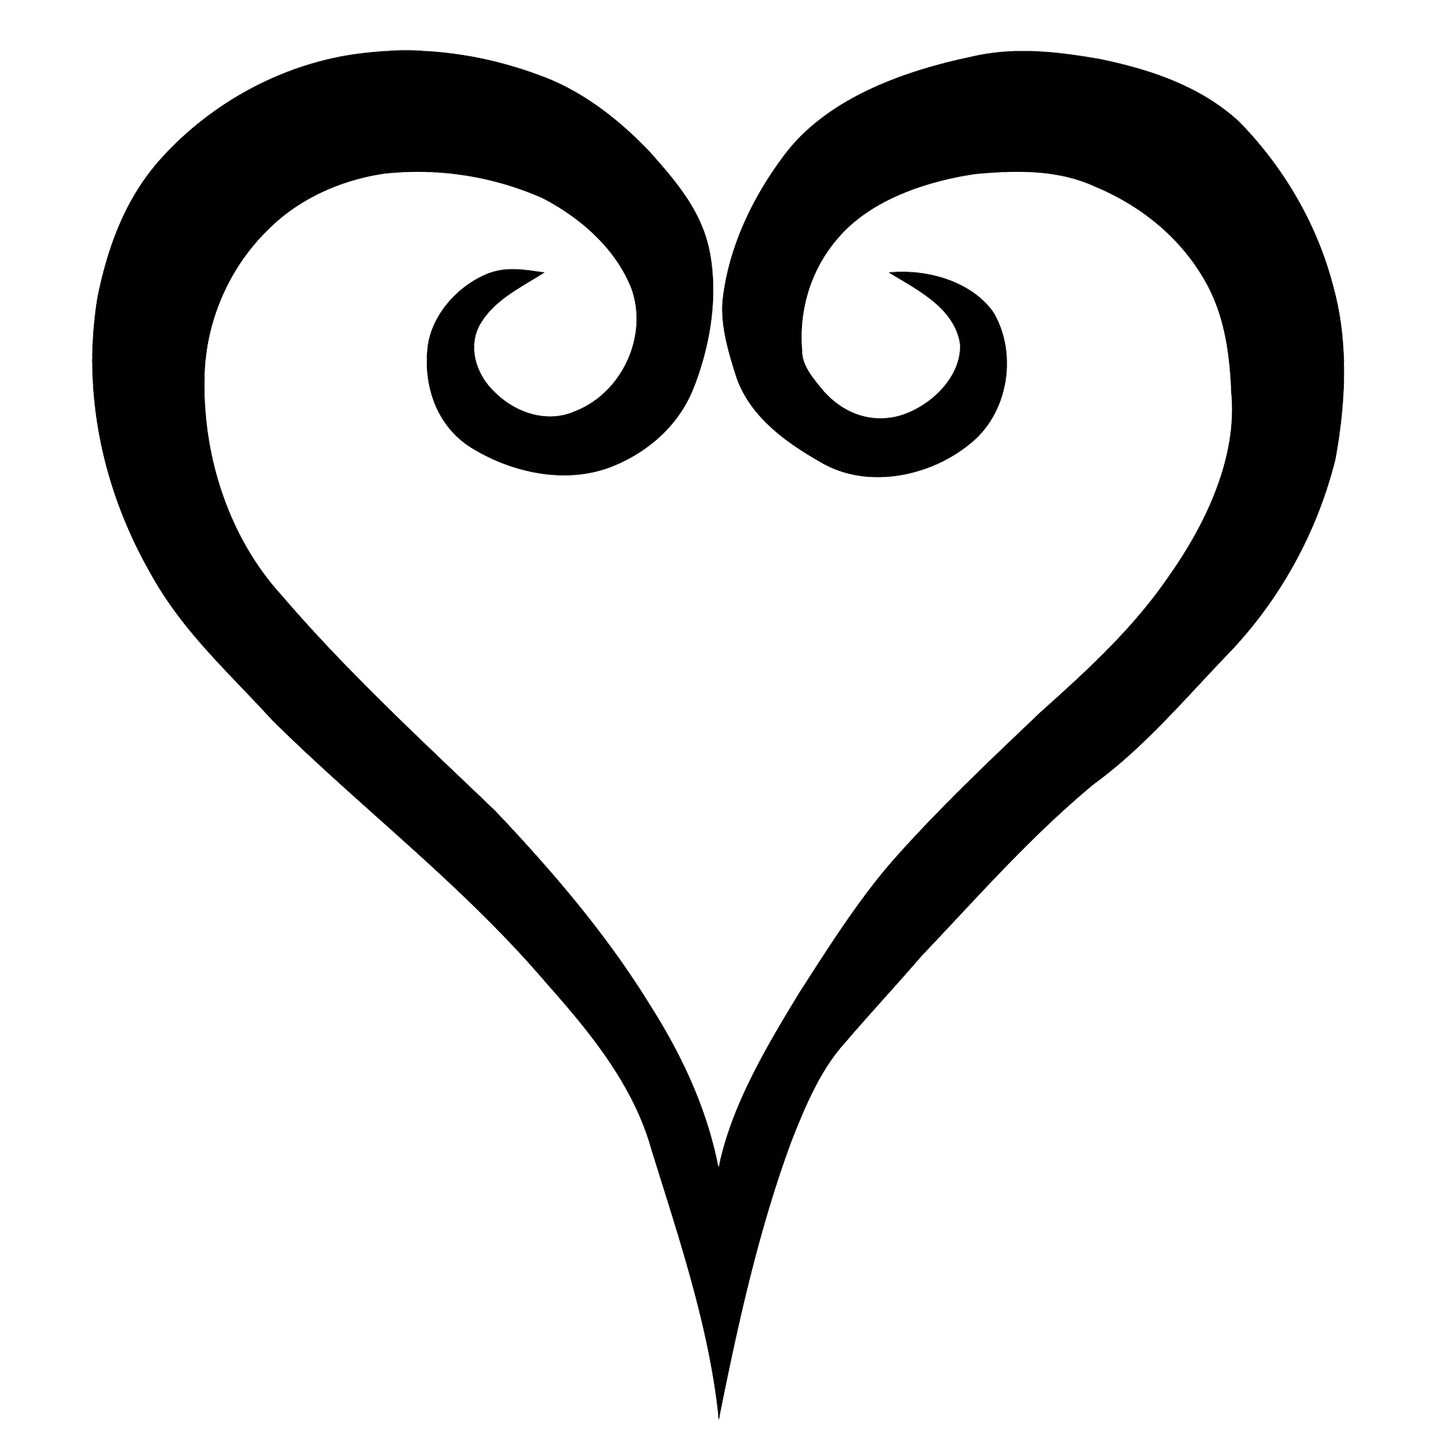 Kingdom Hearts Heart Vinyl Decal Sticker